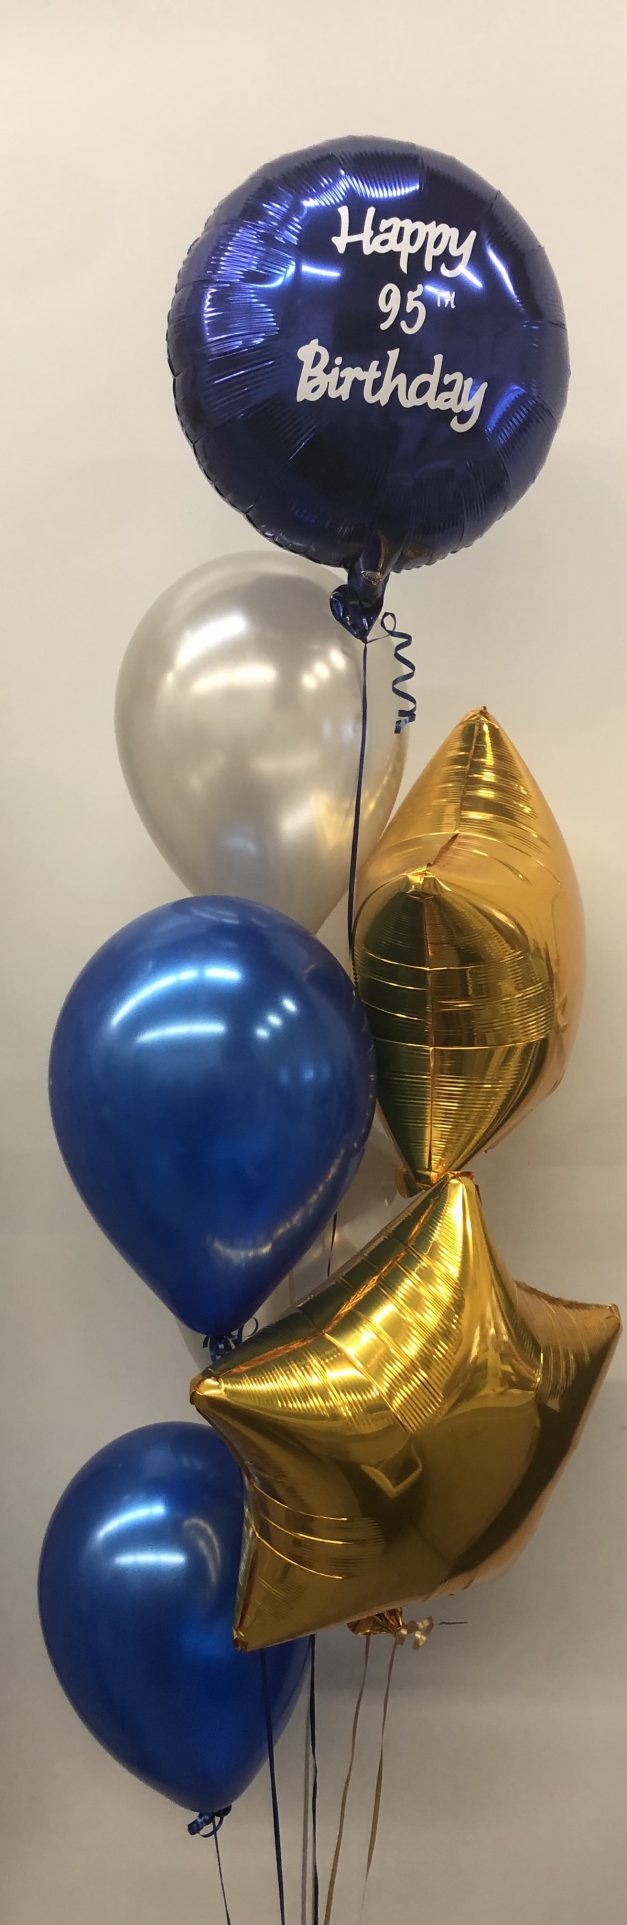 custom 18 inch balloon with star mylars and latex